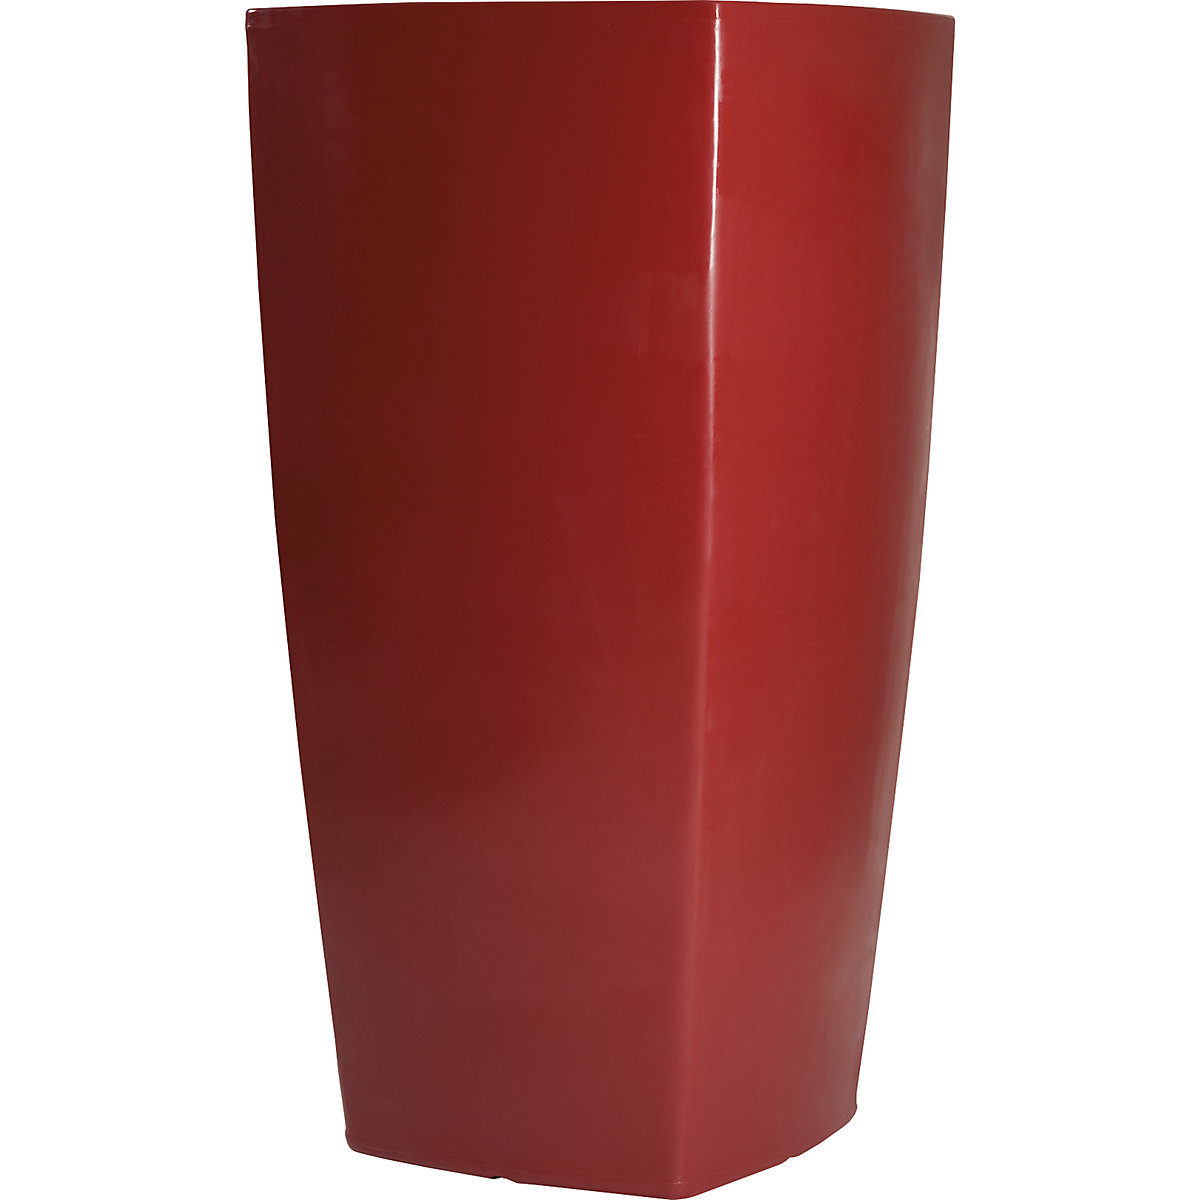 Posuda za biljke – DEGARDO, TREVIA III, VxŠxD 1100 x 570 x 570 mm, u rubin crvenoj boji-3